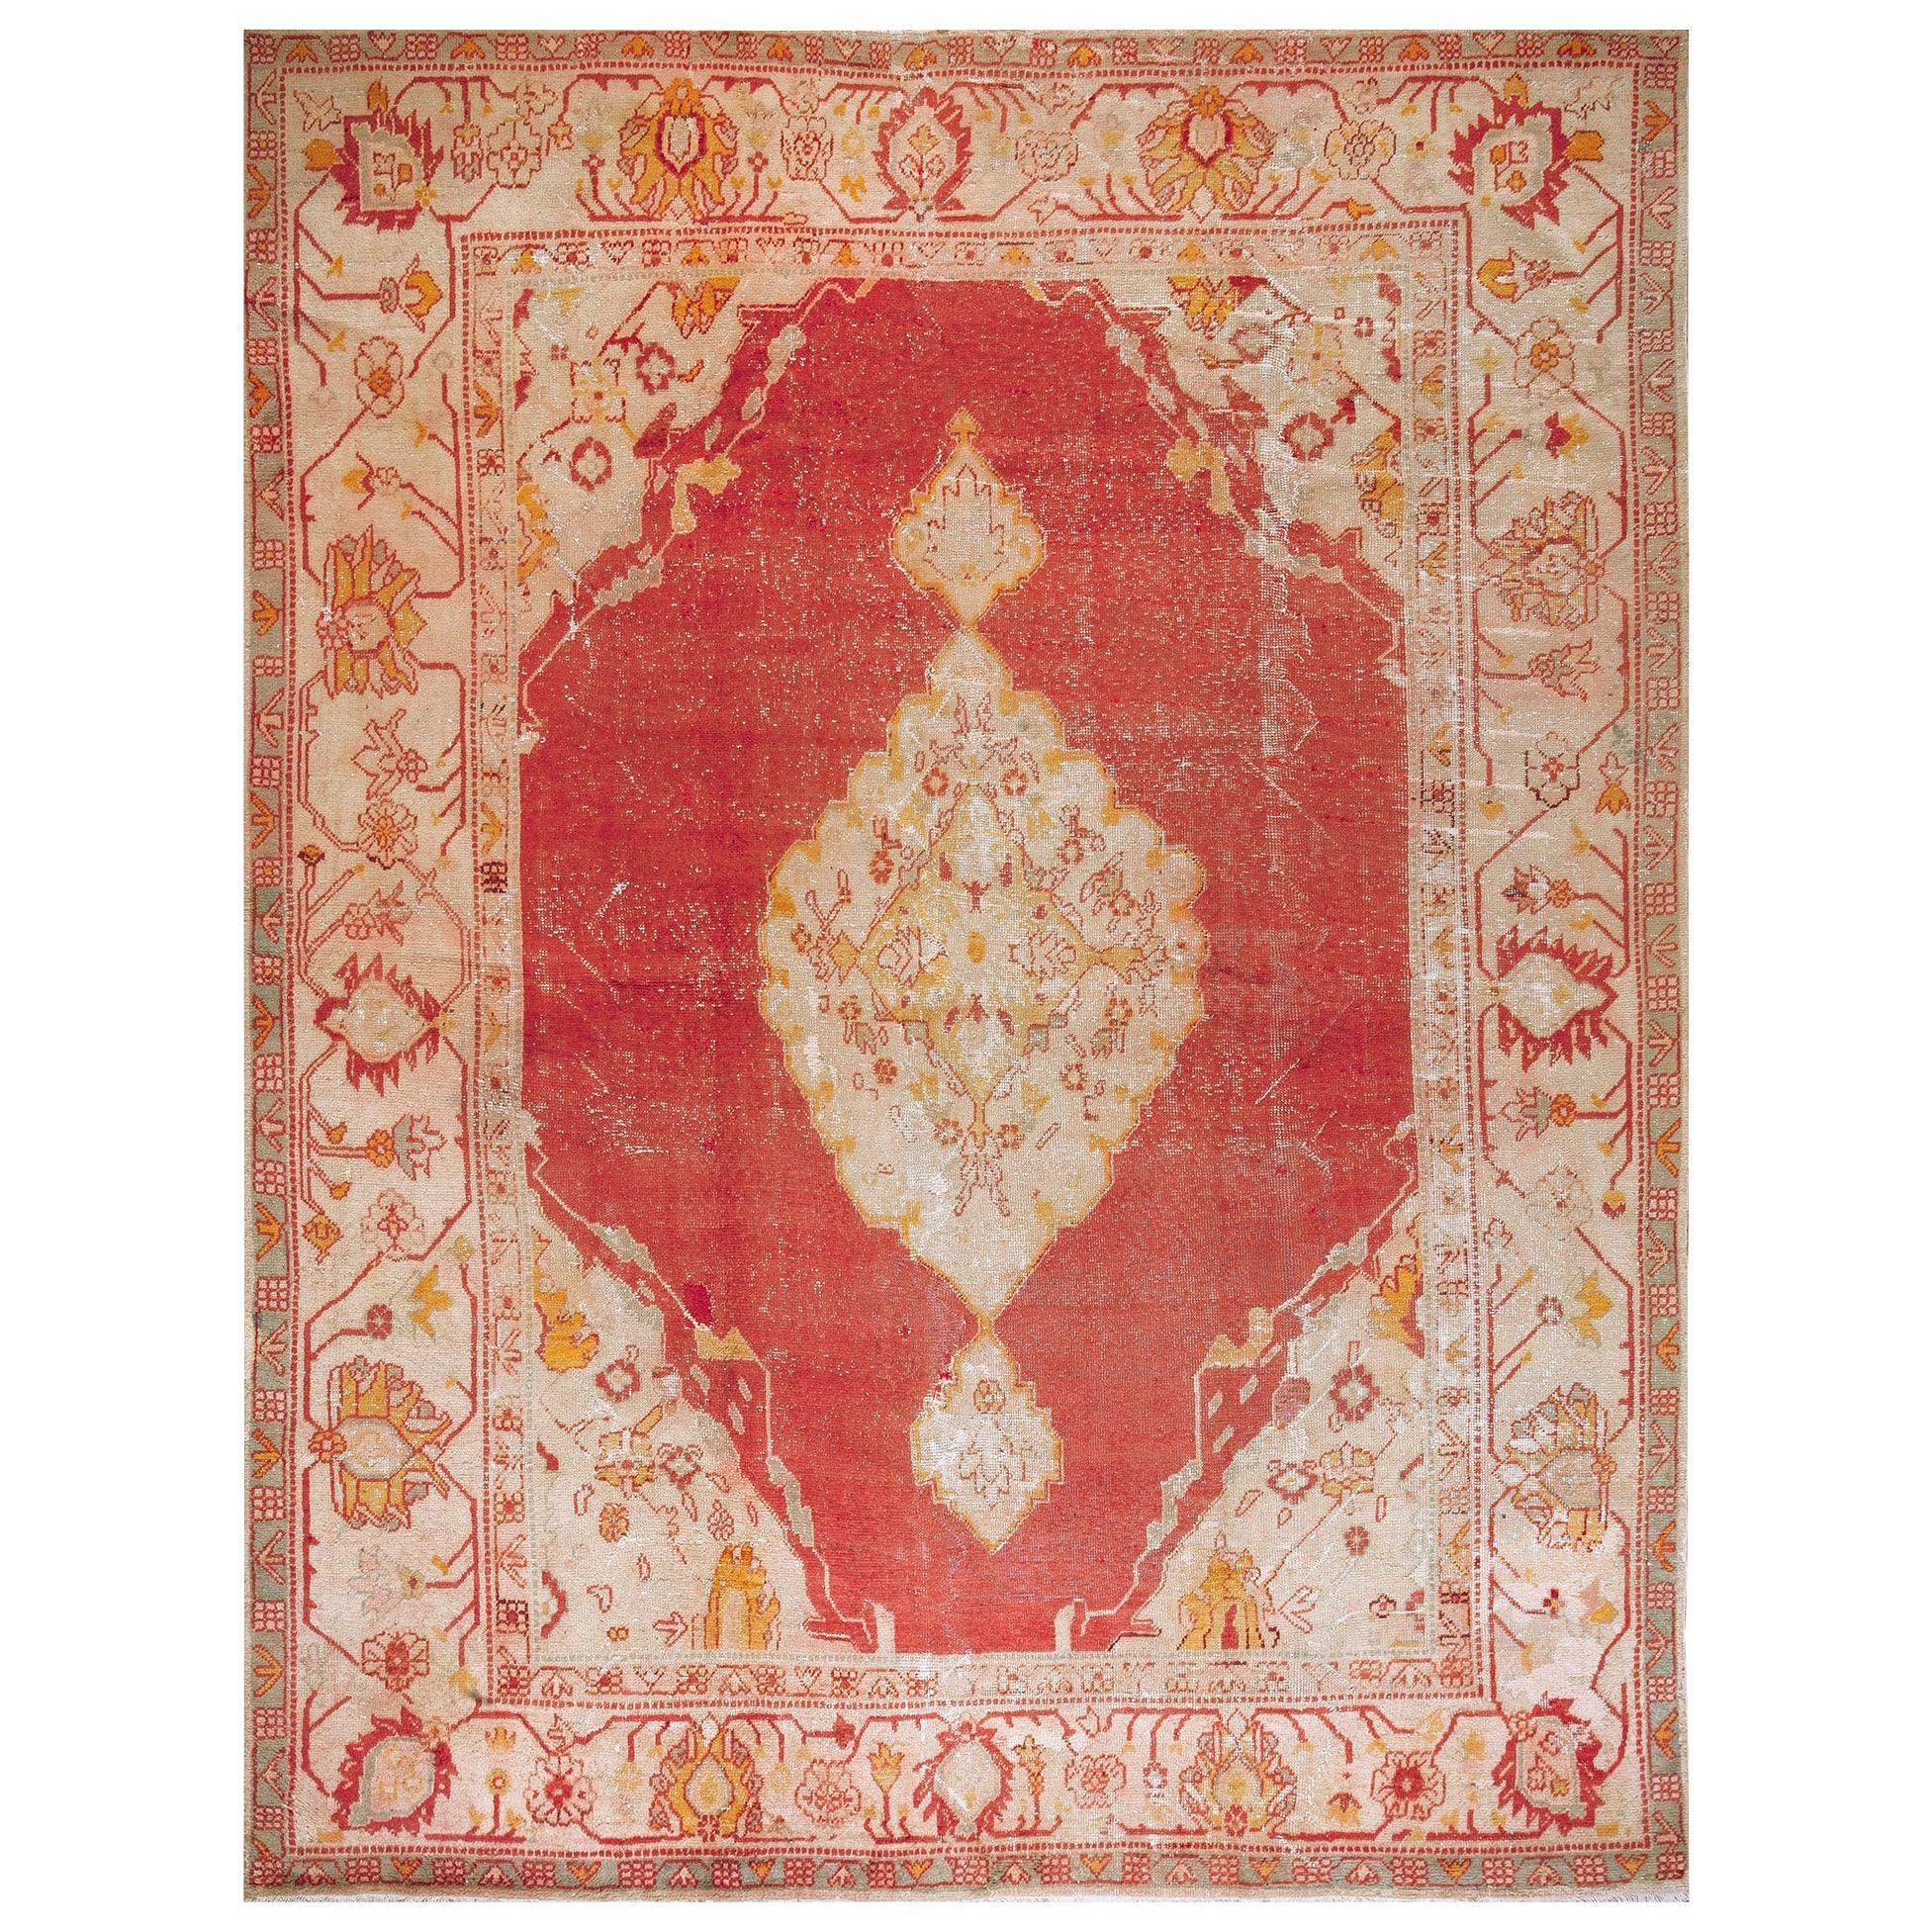 Early 20th Century Turkish Oushak Carpet ( 10' x 13' - 304 x 396 cm ) 